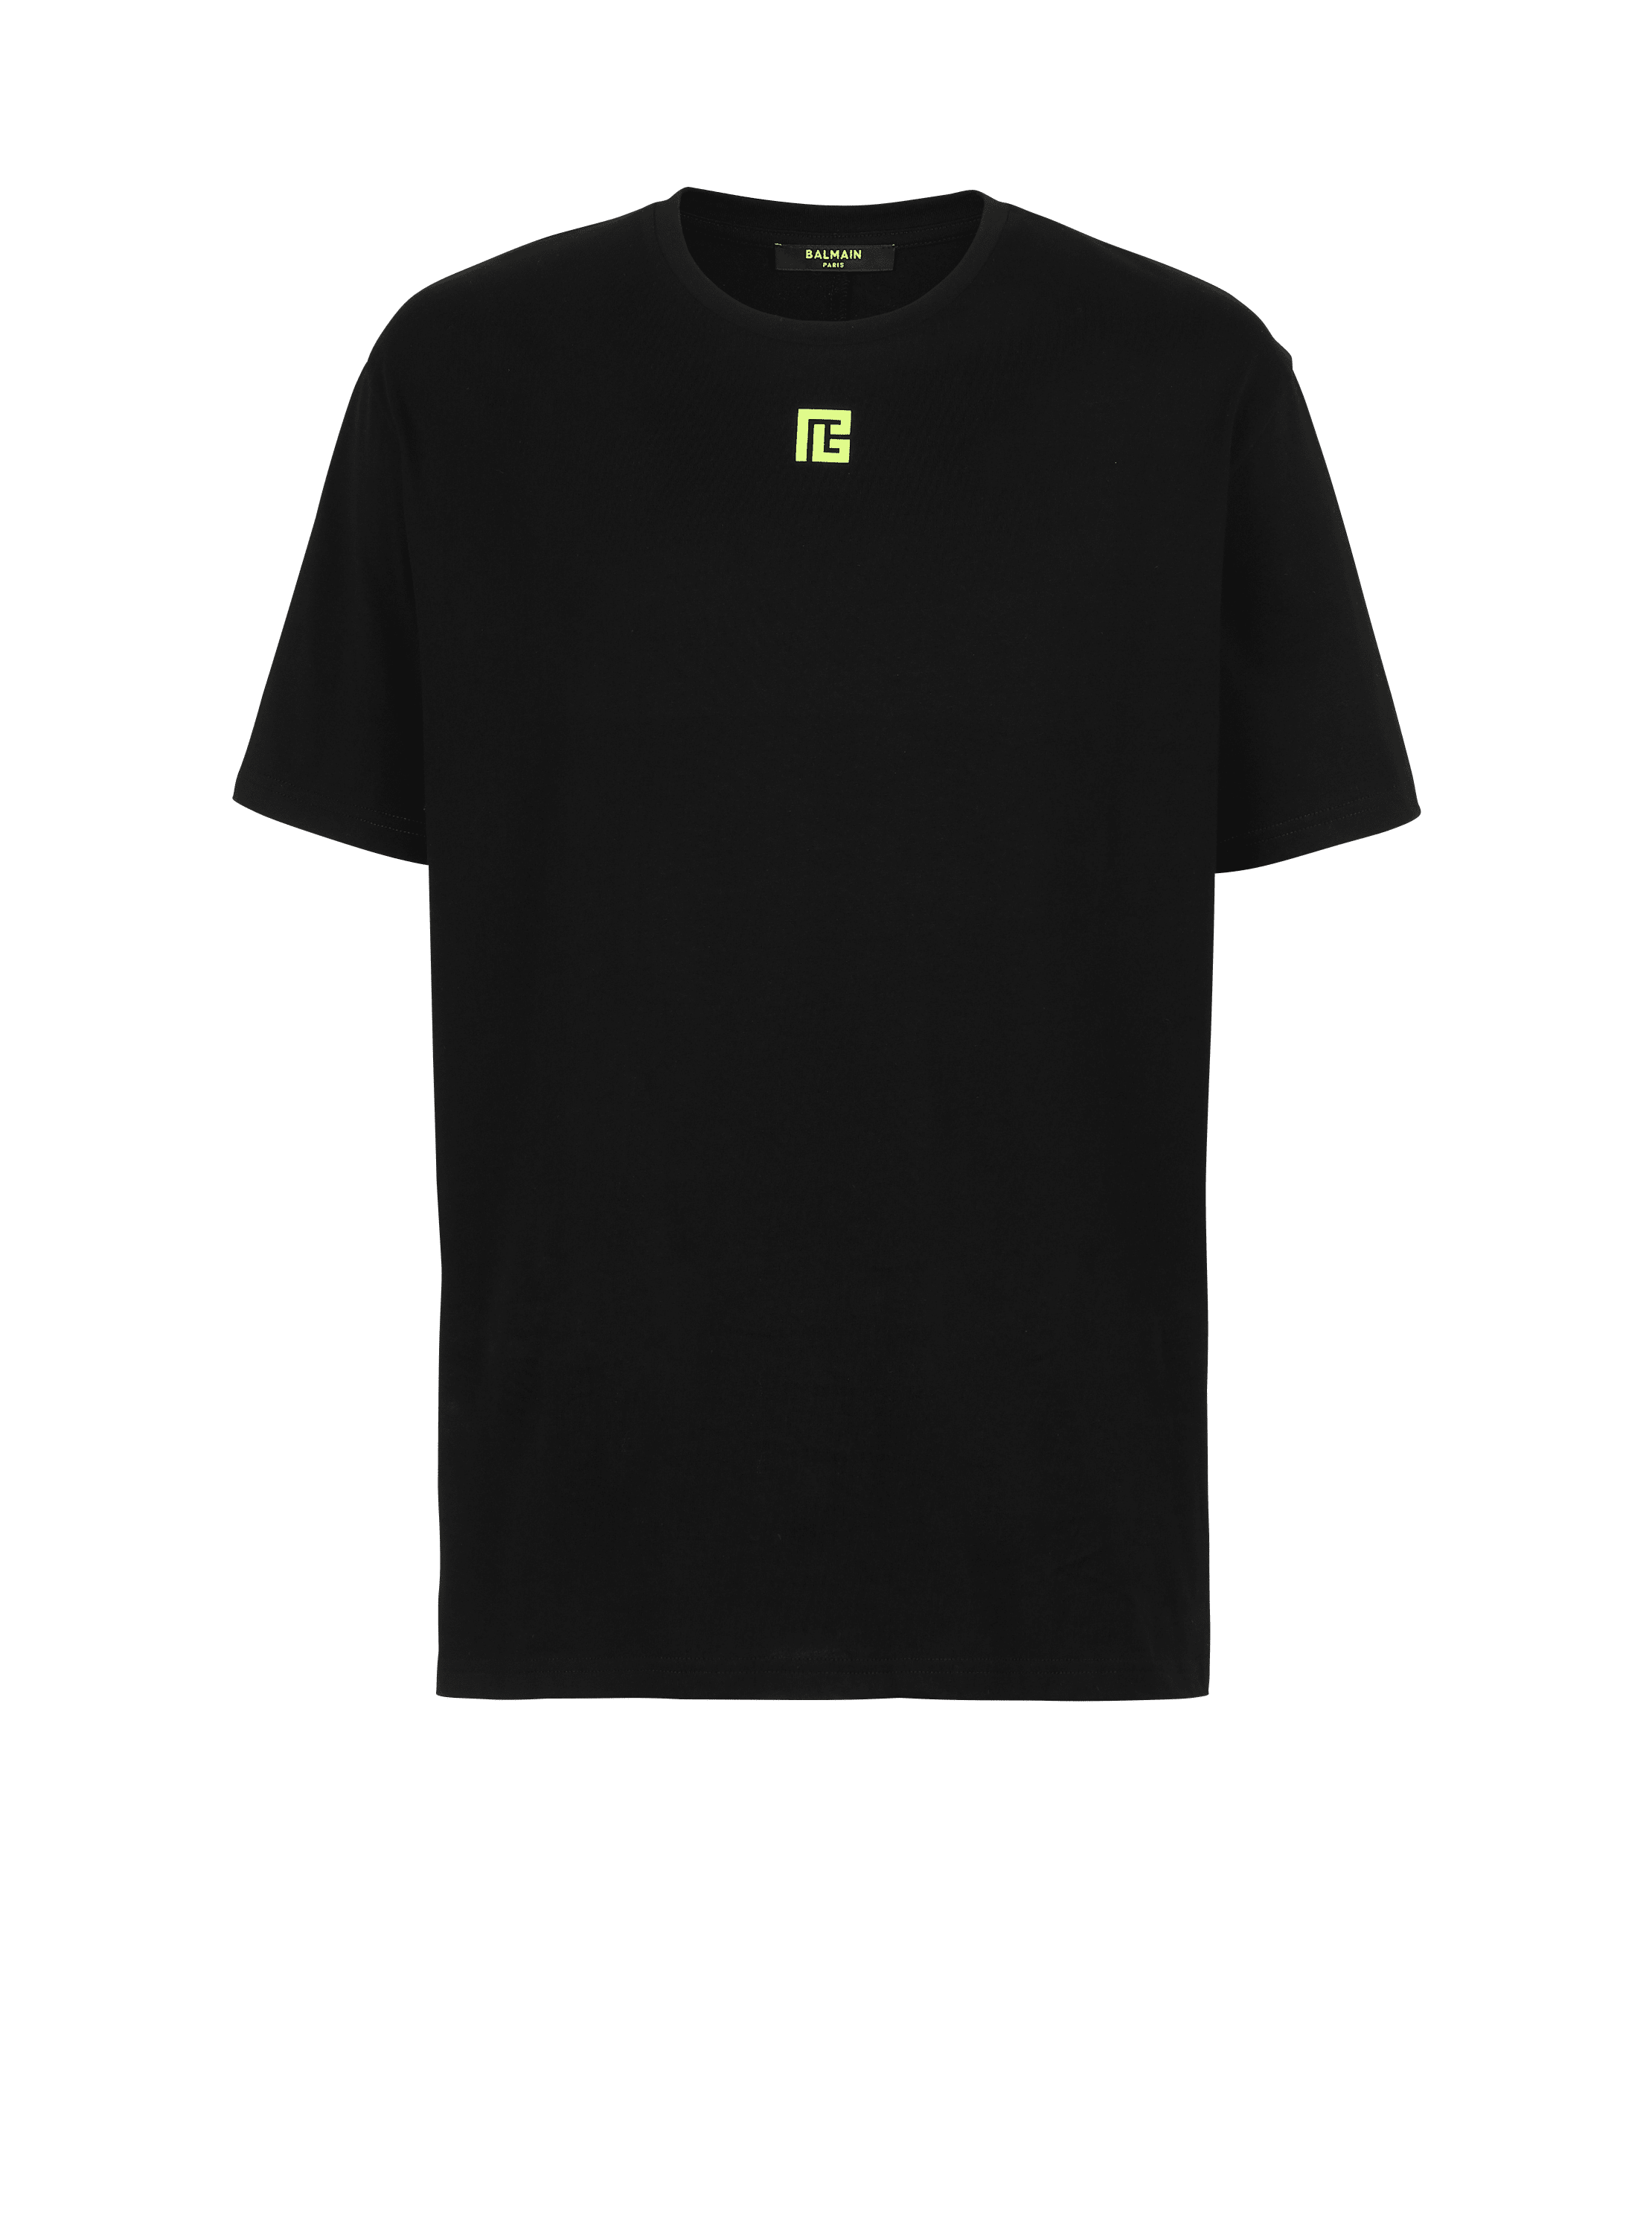 Oversized cotton T-shirt with maxi Balmain logo print on back